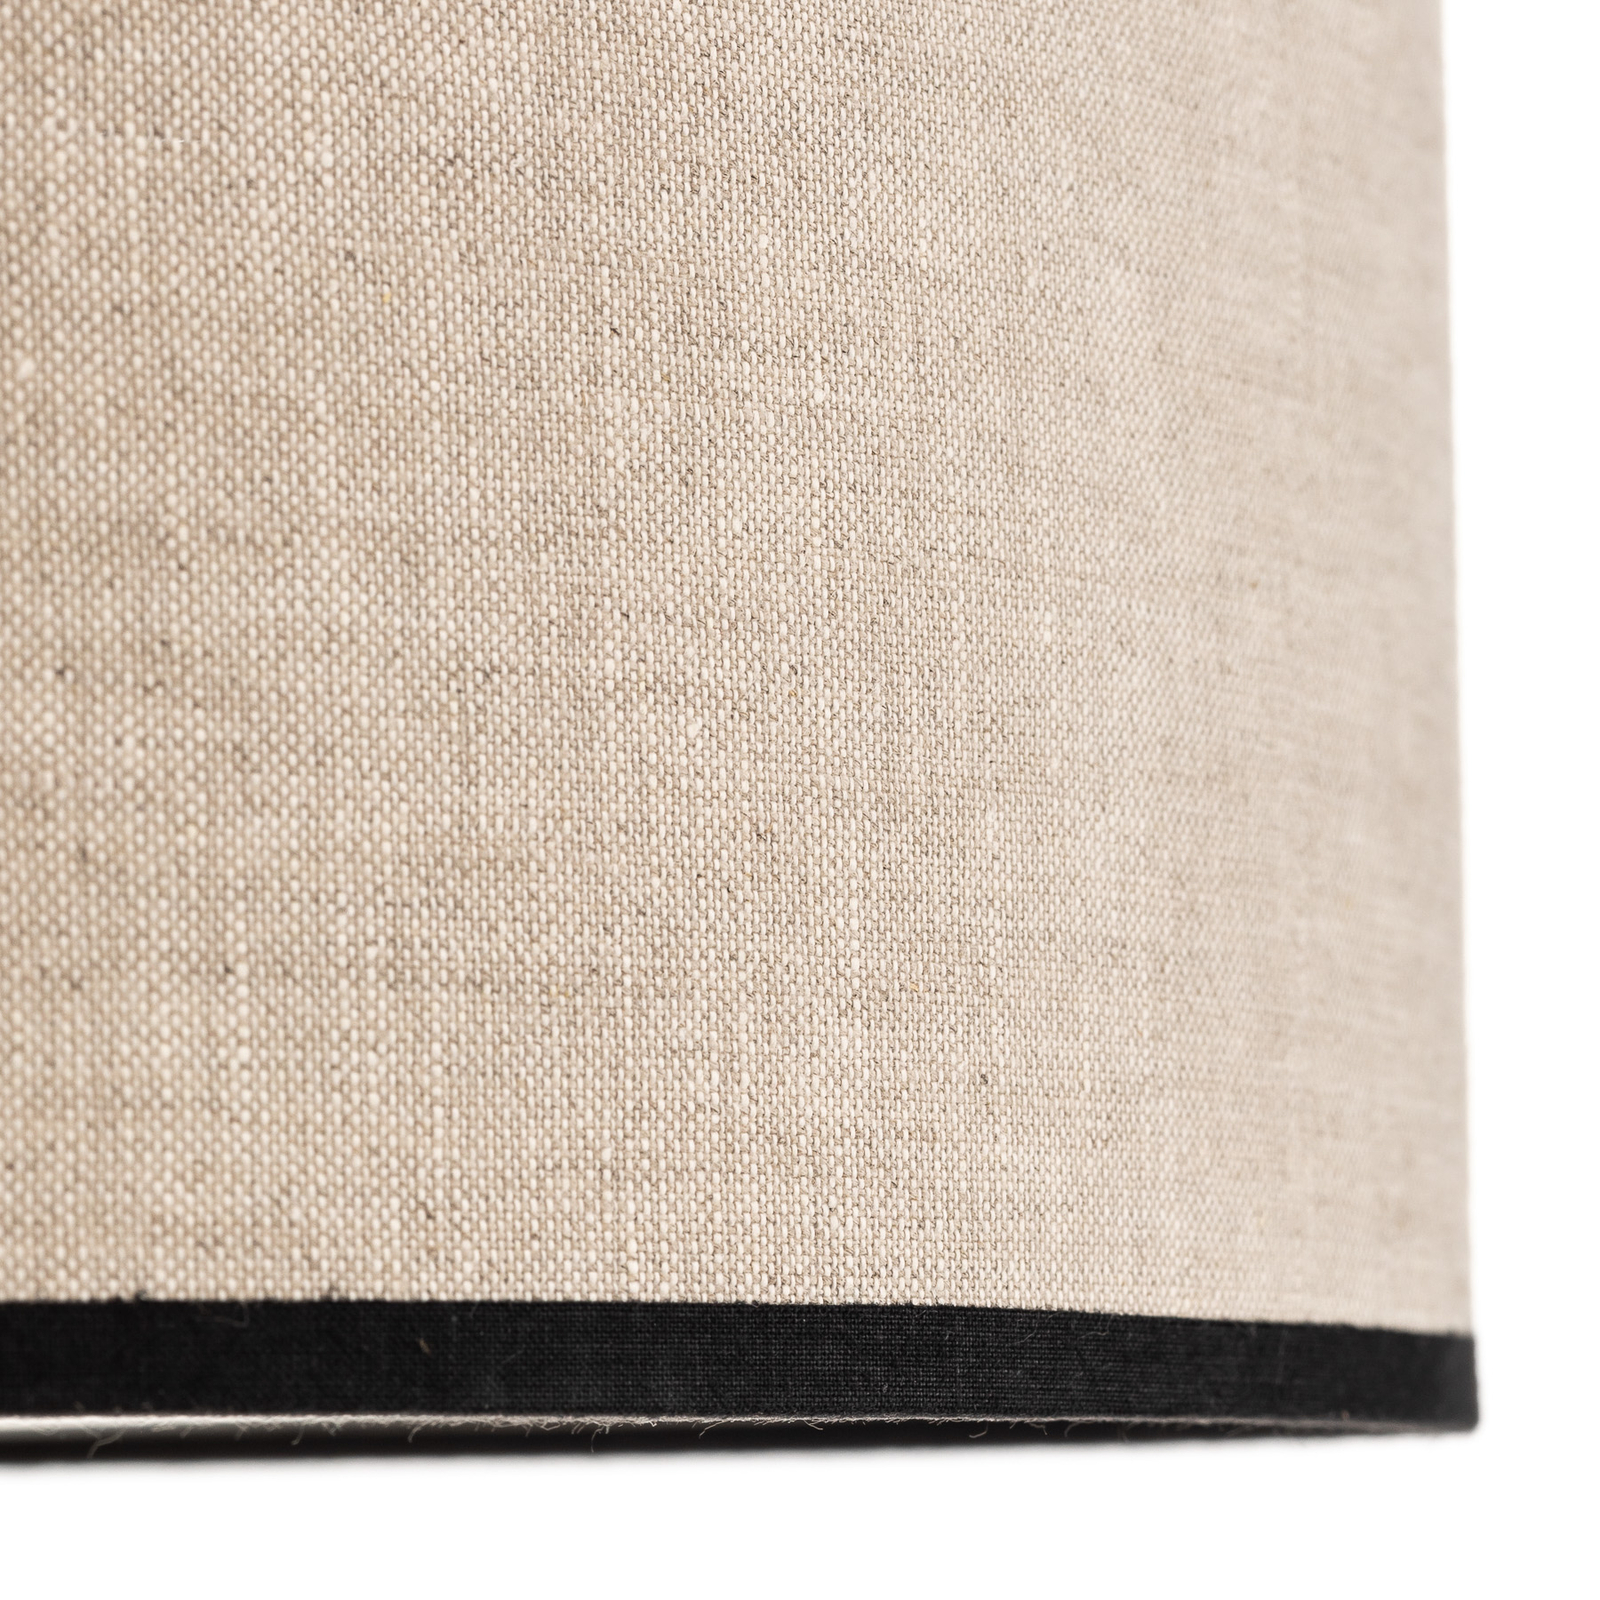 Lampa sufitowa Cavos, klosz tekstylny, Natur, Ø 48 cm